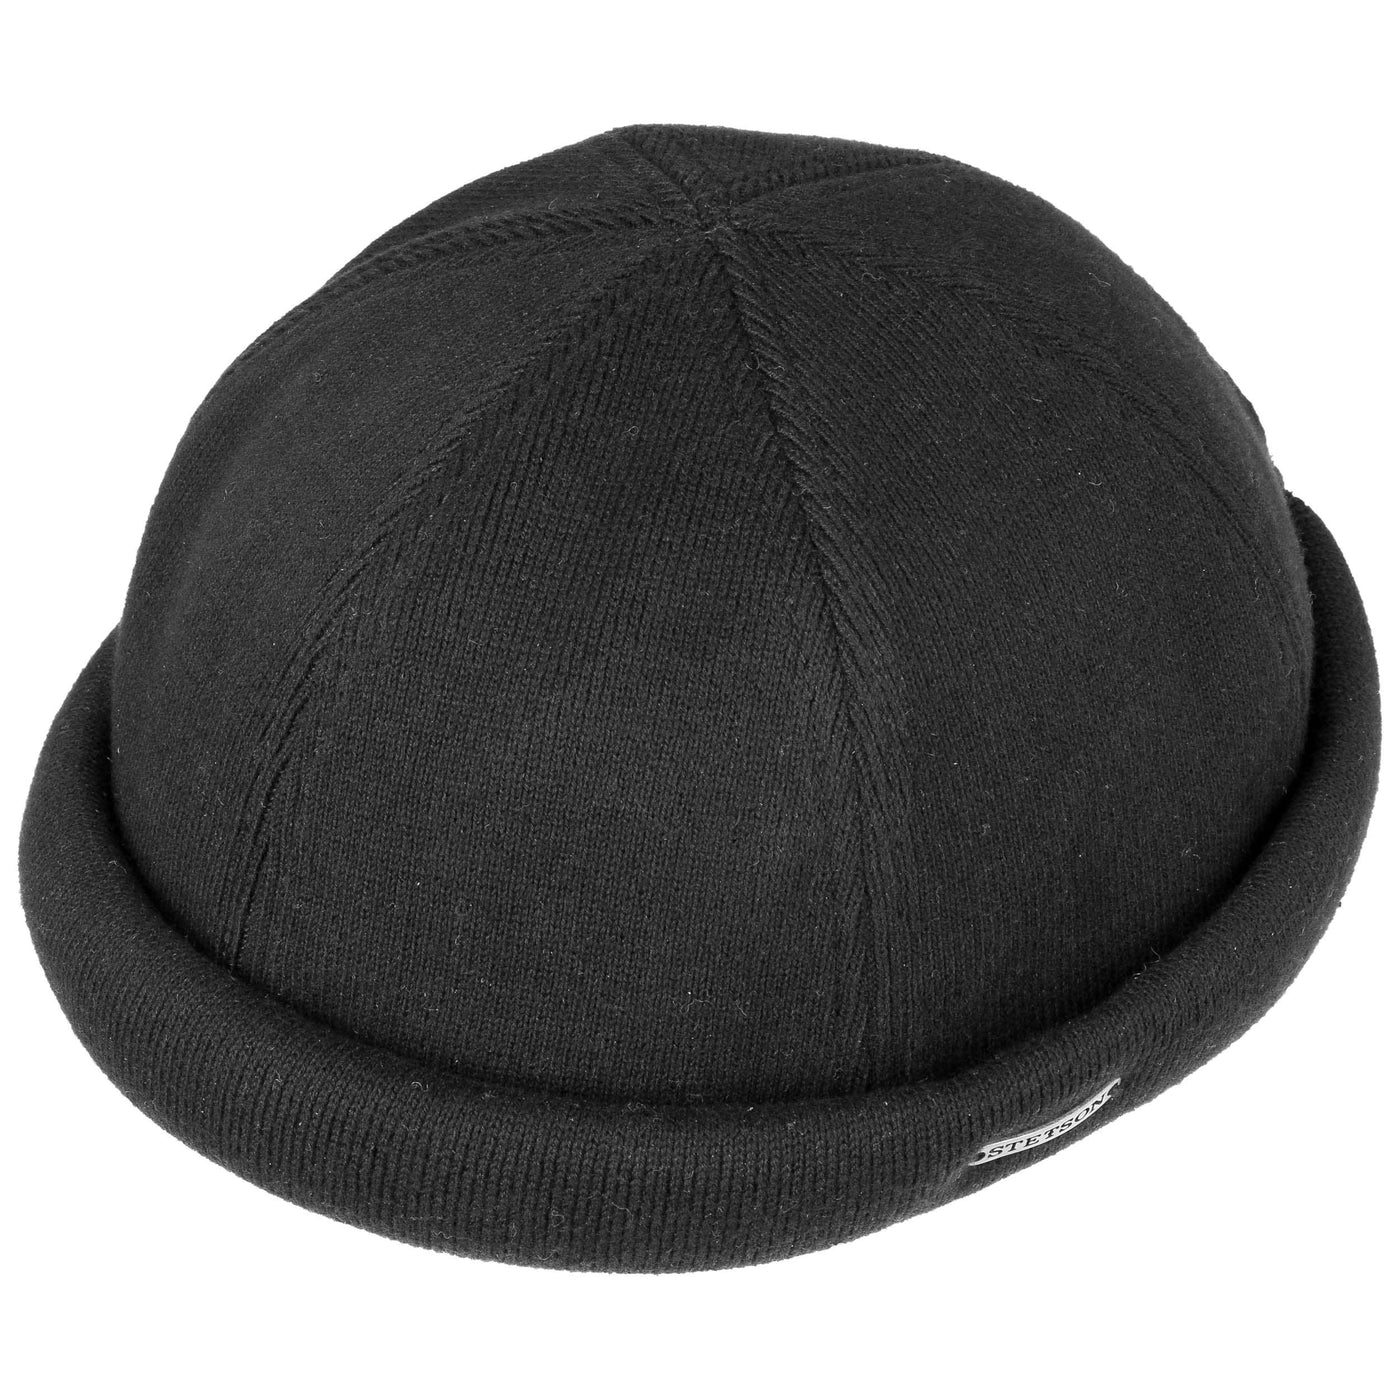 Stetson Black Docker Cap/Hat in Knitted Cotton